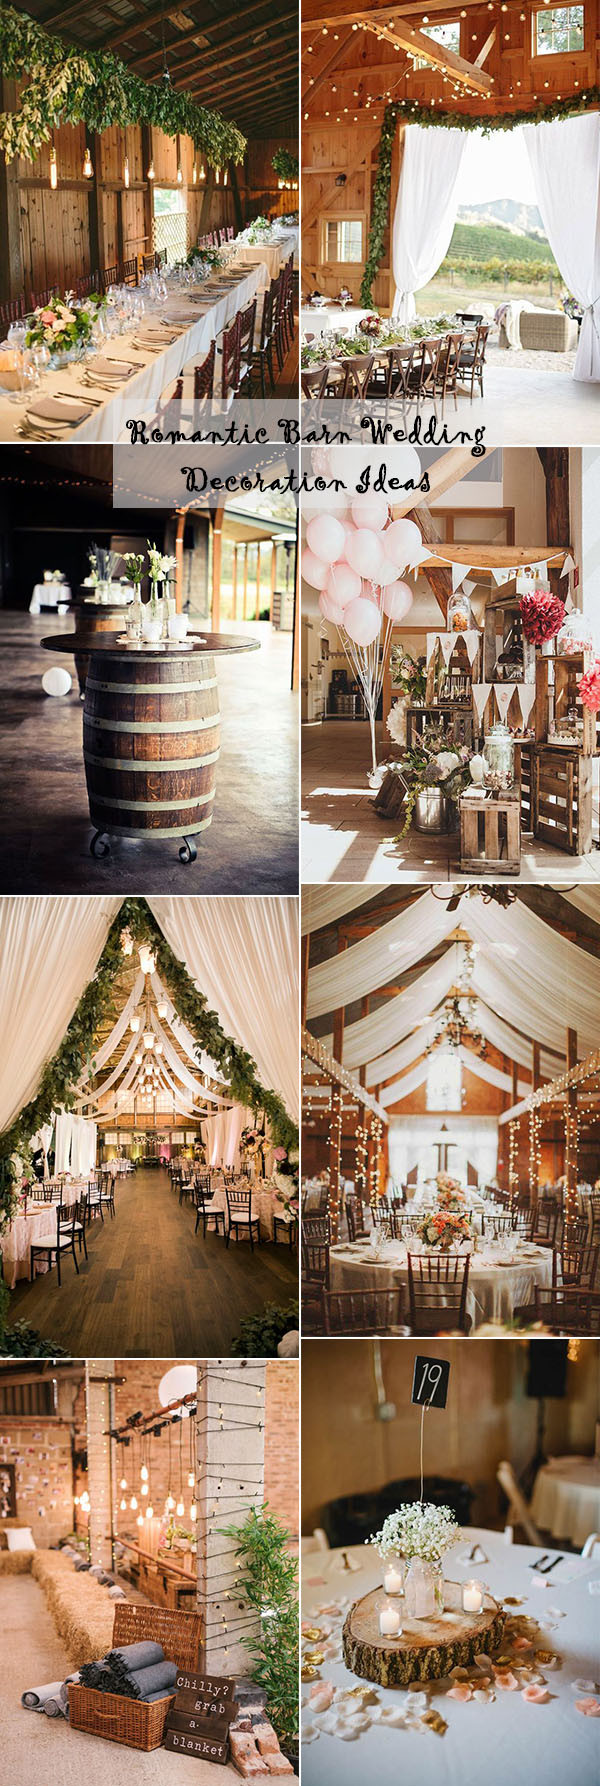 Barn Wedding Decoration Ideas
 25 Sweet and Romantic Rustic Barn Wedding Decoration Ideas